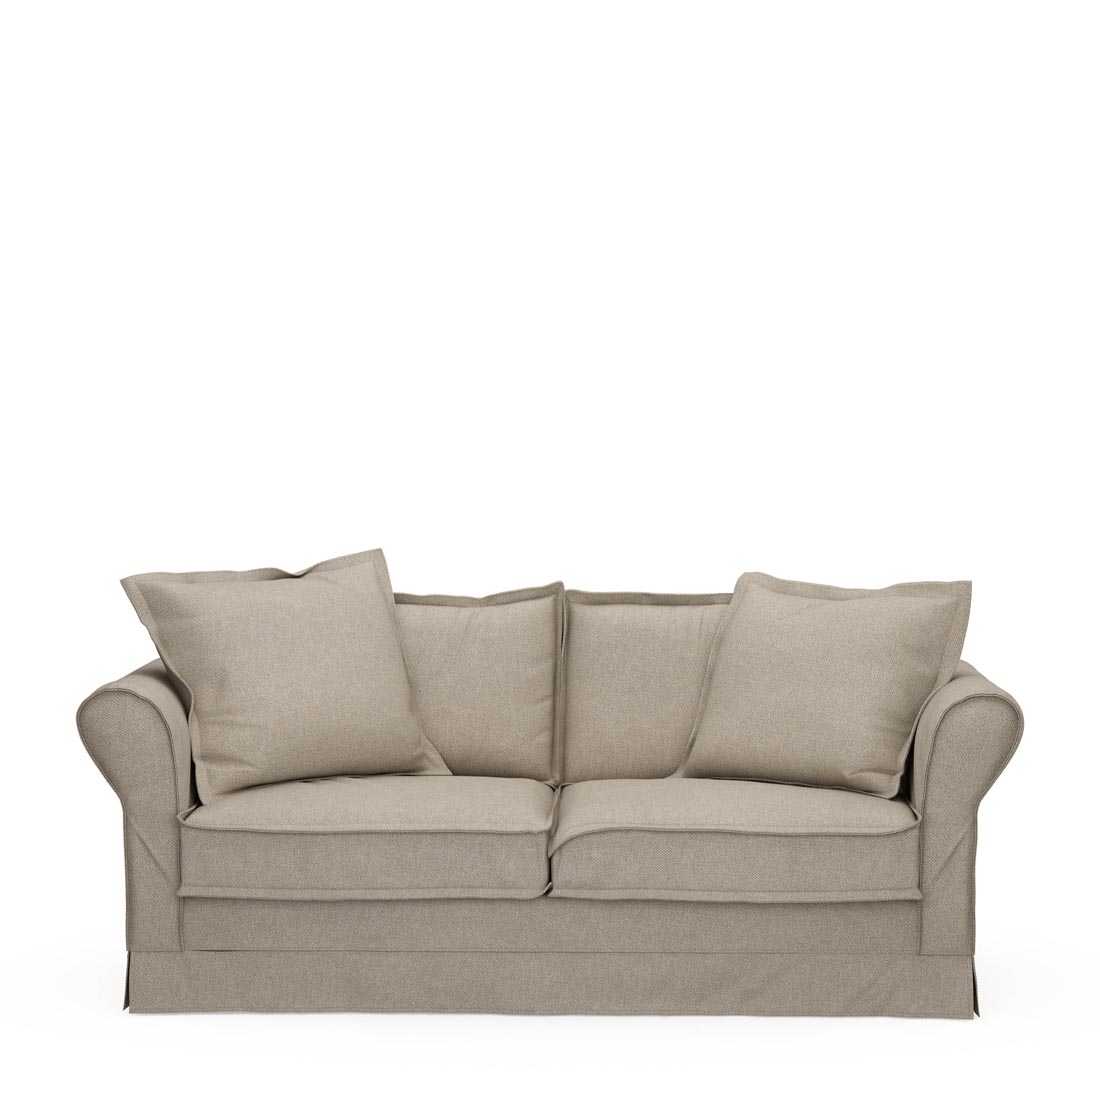 Rivièra Maison - Carlton Sofa 2,5 Seater, oxford weave, anvers flax - Kleur: beige